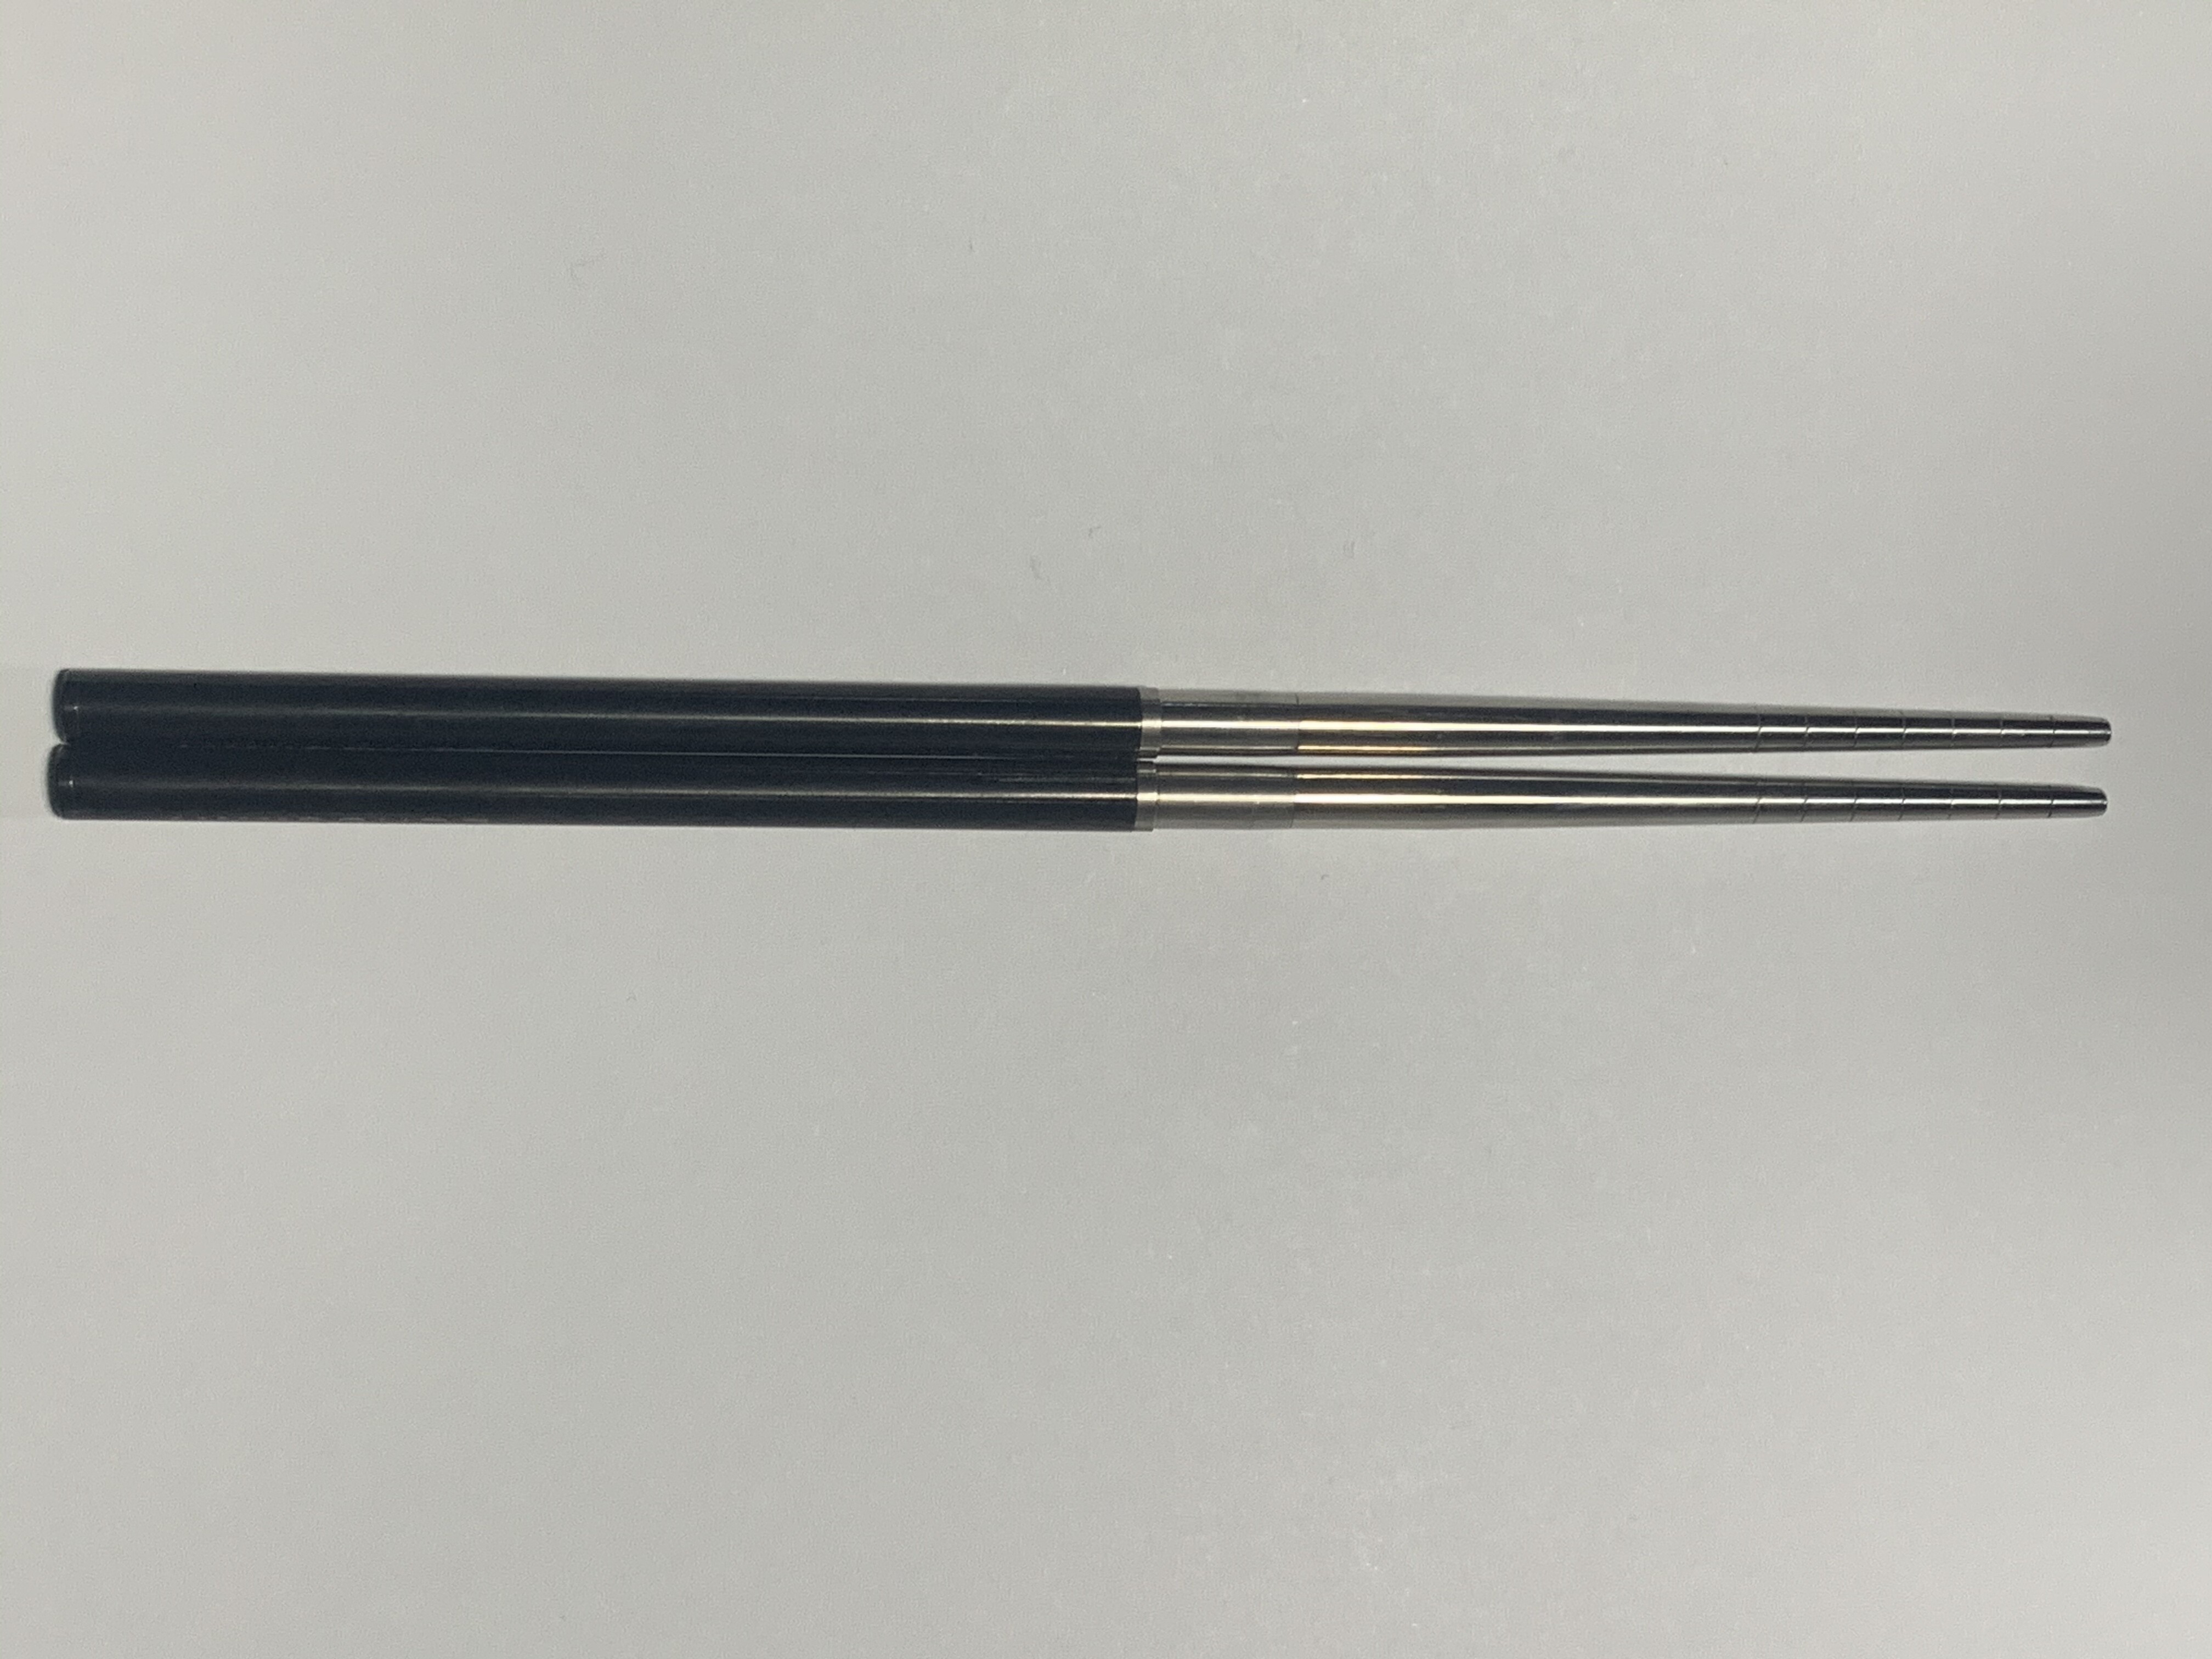 304 stainless steel chopsticks, stainless steel chopstick, stainless steel cooking chopsticks, steel chopsticks vs wood, buy stainless steel chopsticks